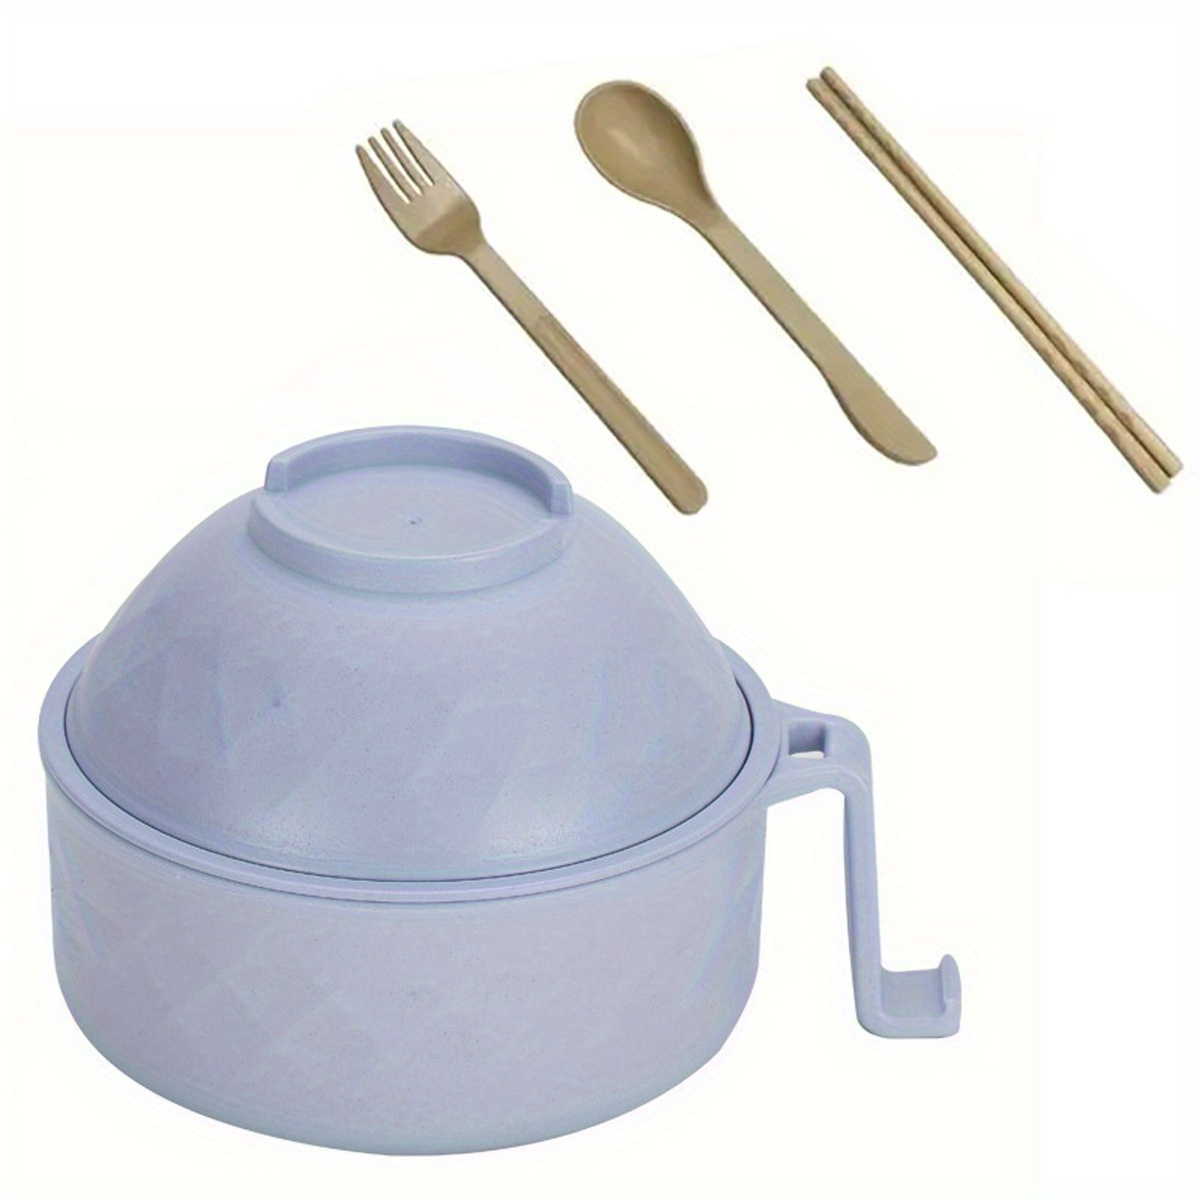 Durable Remen Noodle Container, 1200ml Ramen Cooker Soup Mug, Japanese  Ramen Picnic Tableware for Pasta Dishes, Portable Safe Reusable Noodle  Bowl